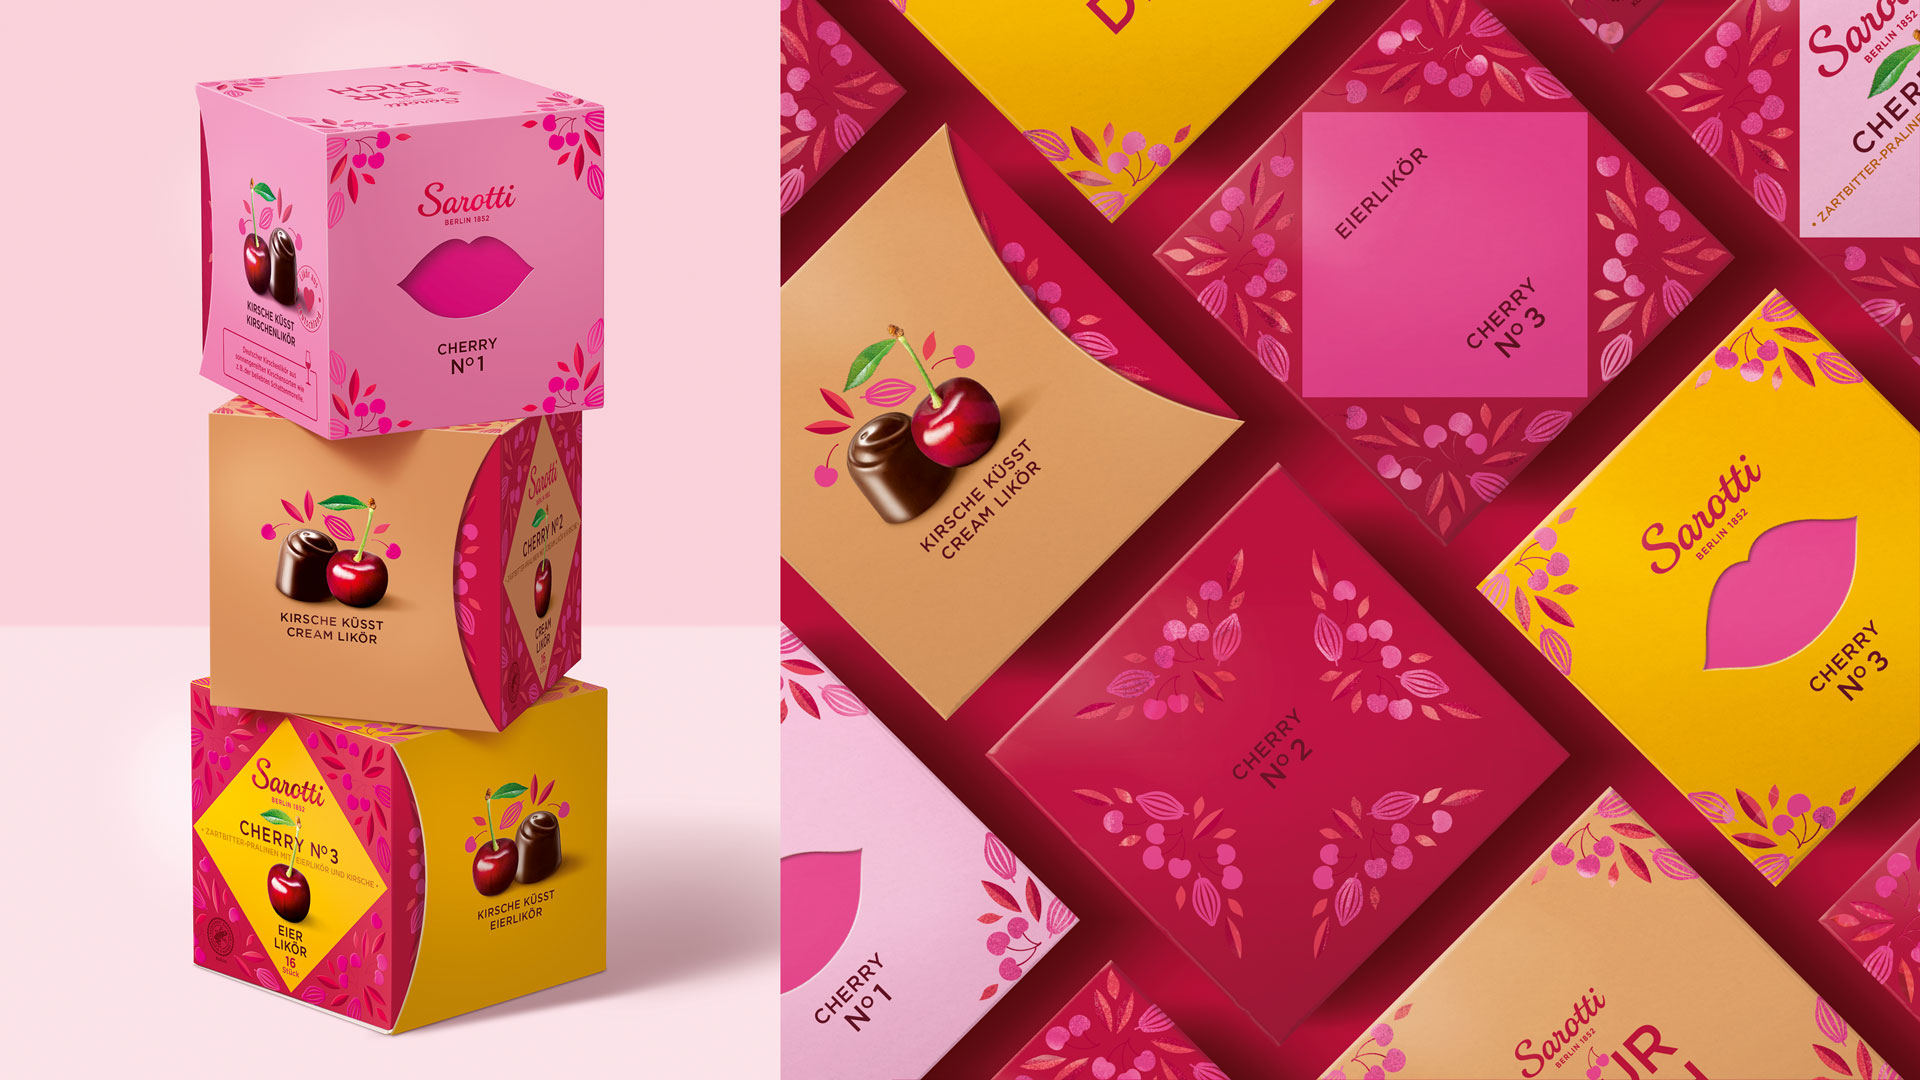 Sarotti Cherry Packaging Design